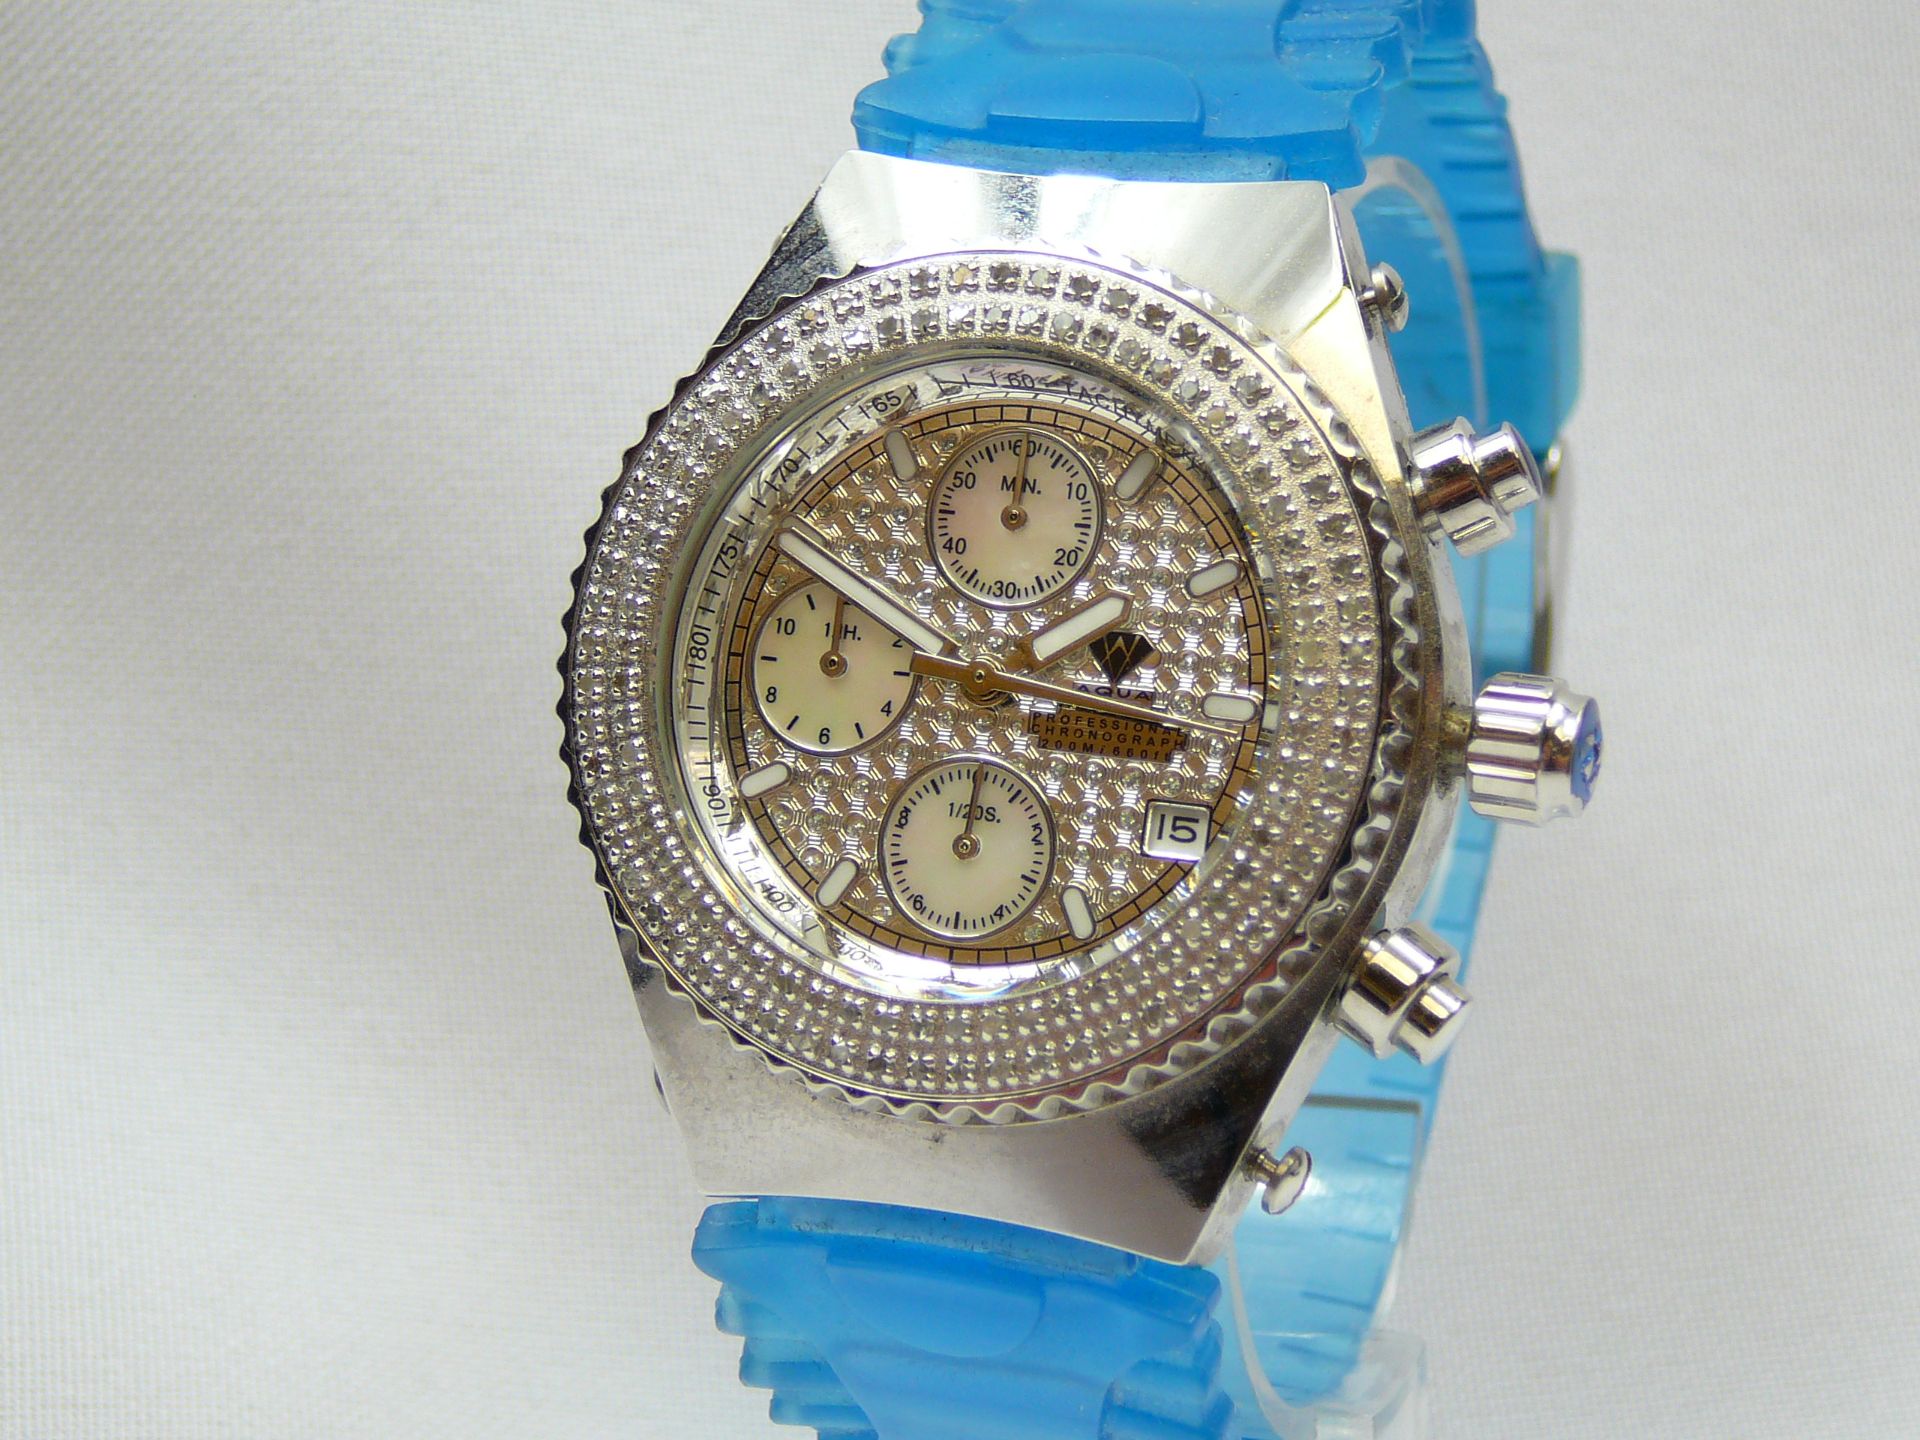 Ladies Aquamaster Wristwatch - Image 2 of 3